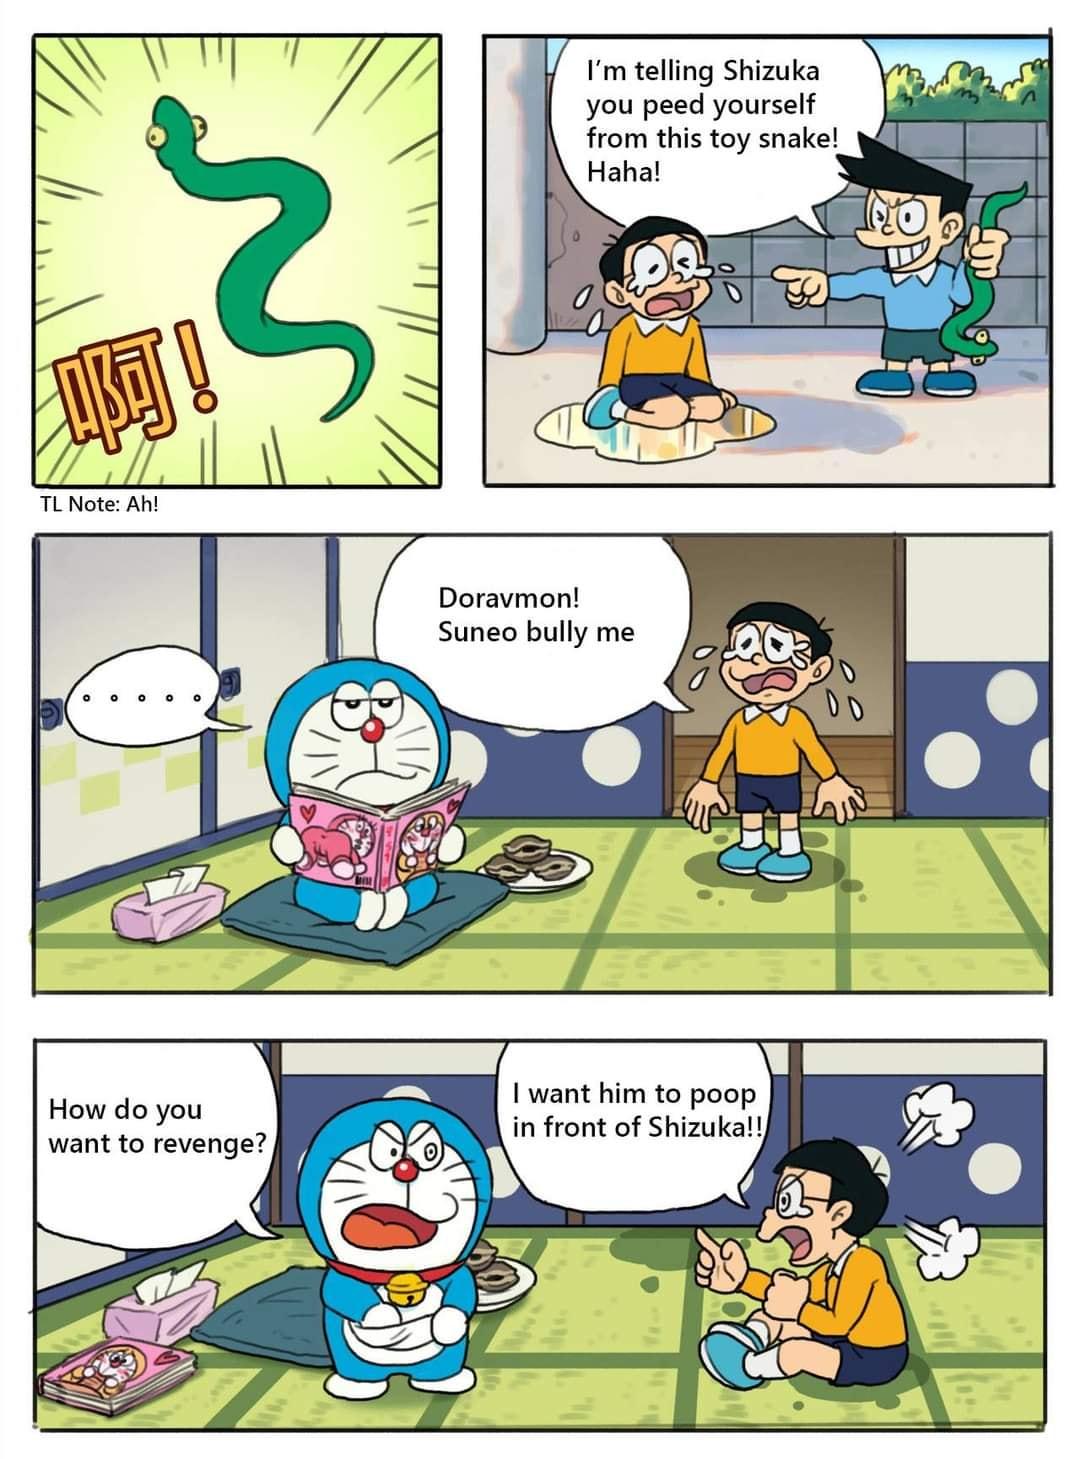 Cogiendo DORAVMON - Doraemon Mamadas - Page 2